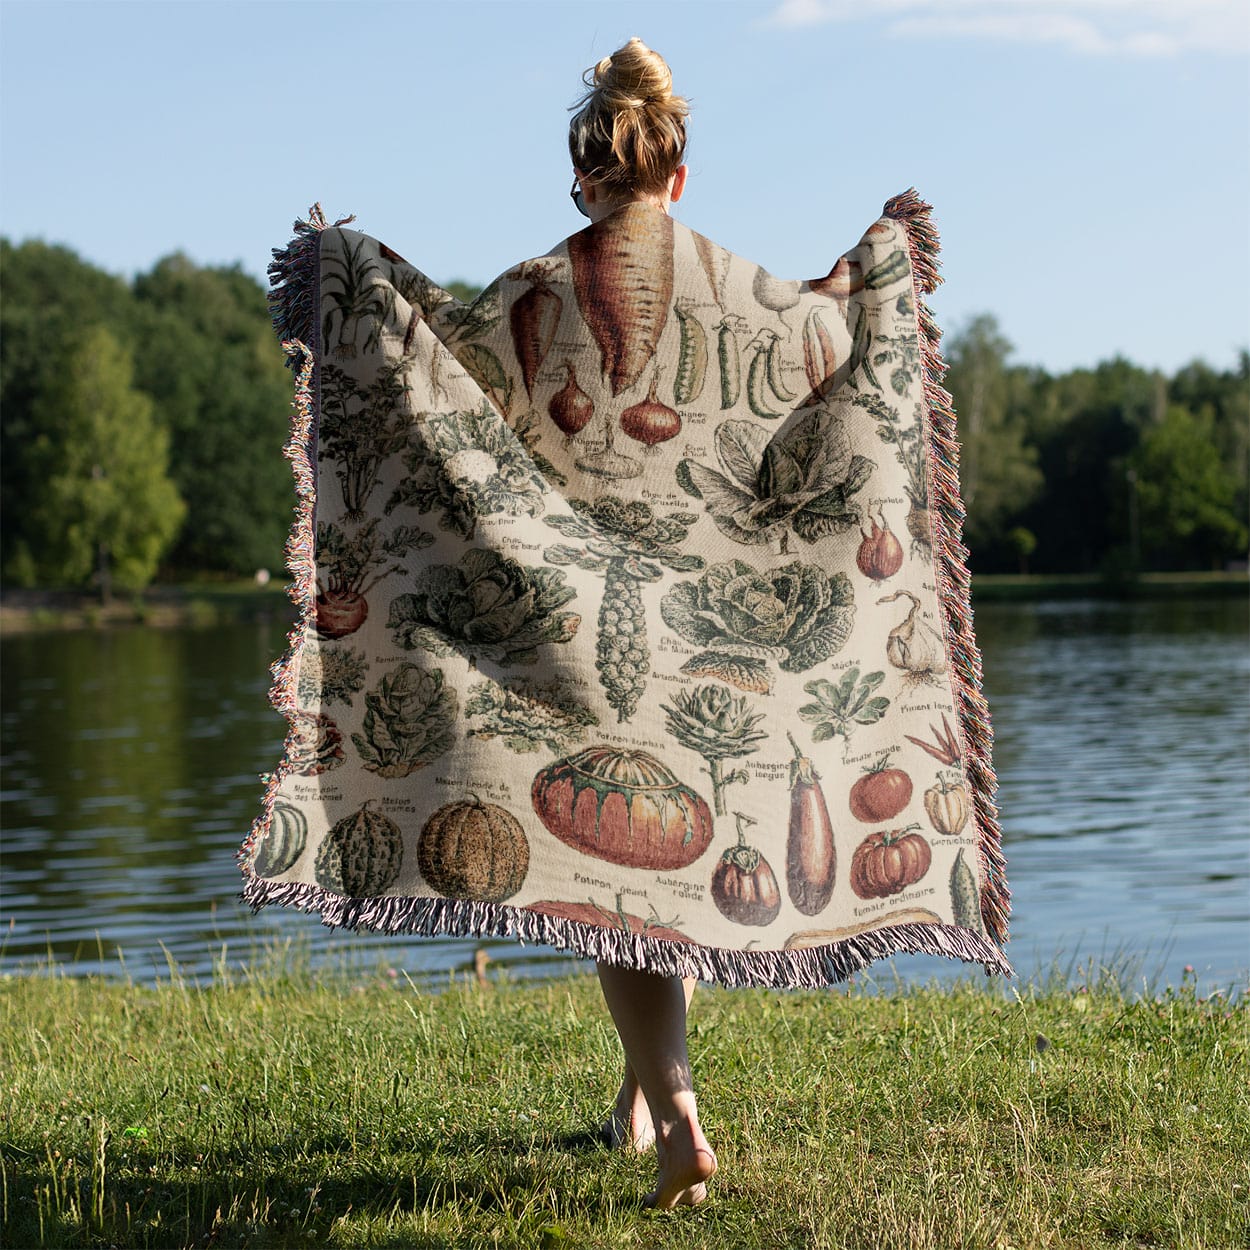 Vegetarian Woven Blanket Held on a Woman's Back Outside